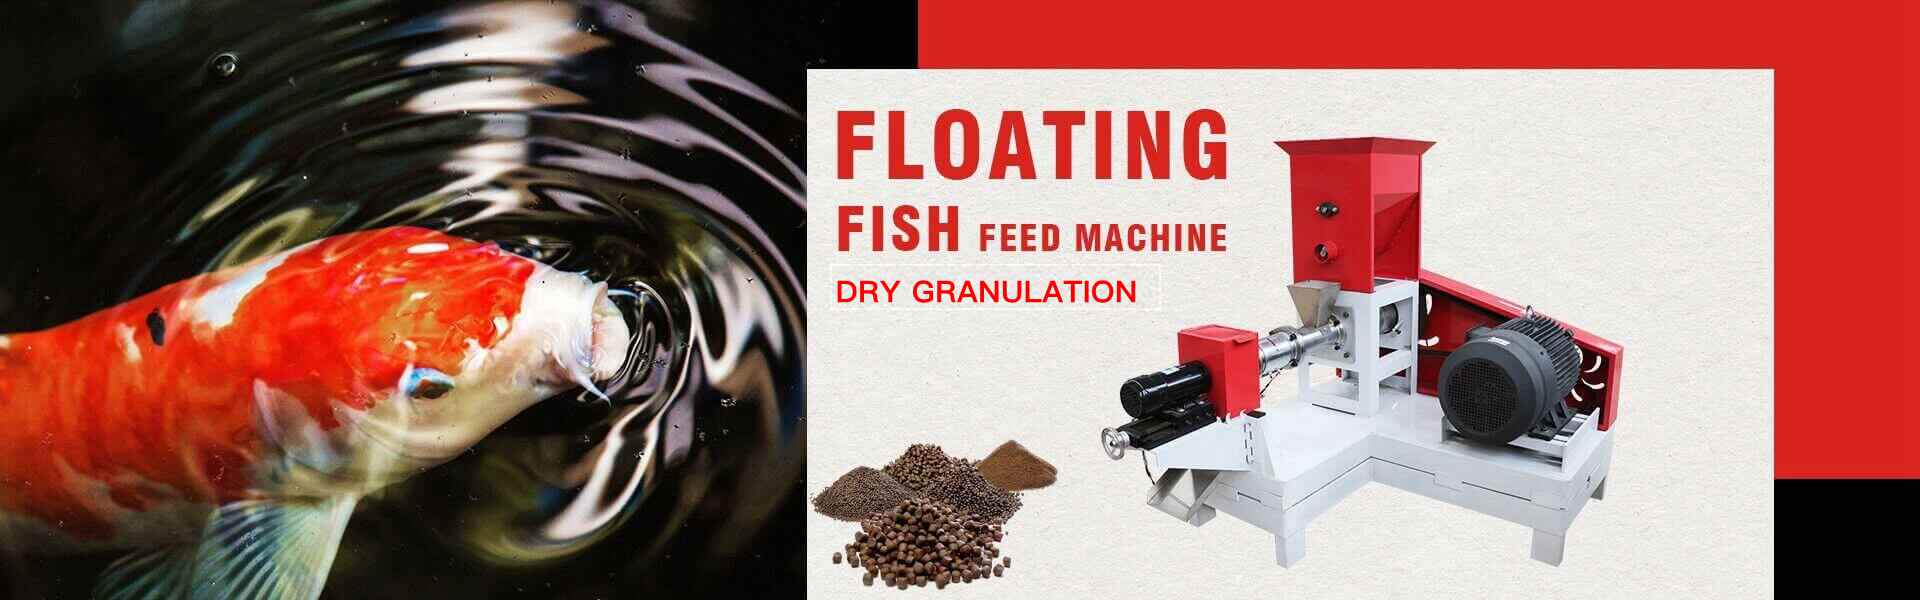 Floating fish feed pellet machine